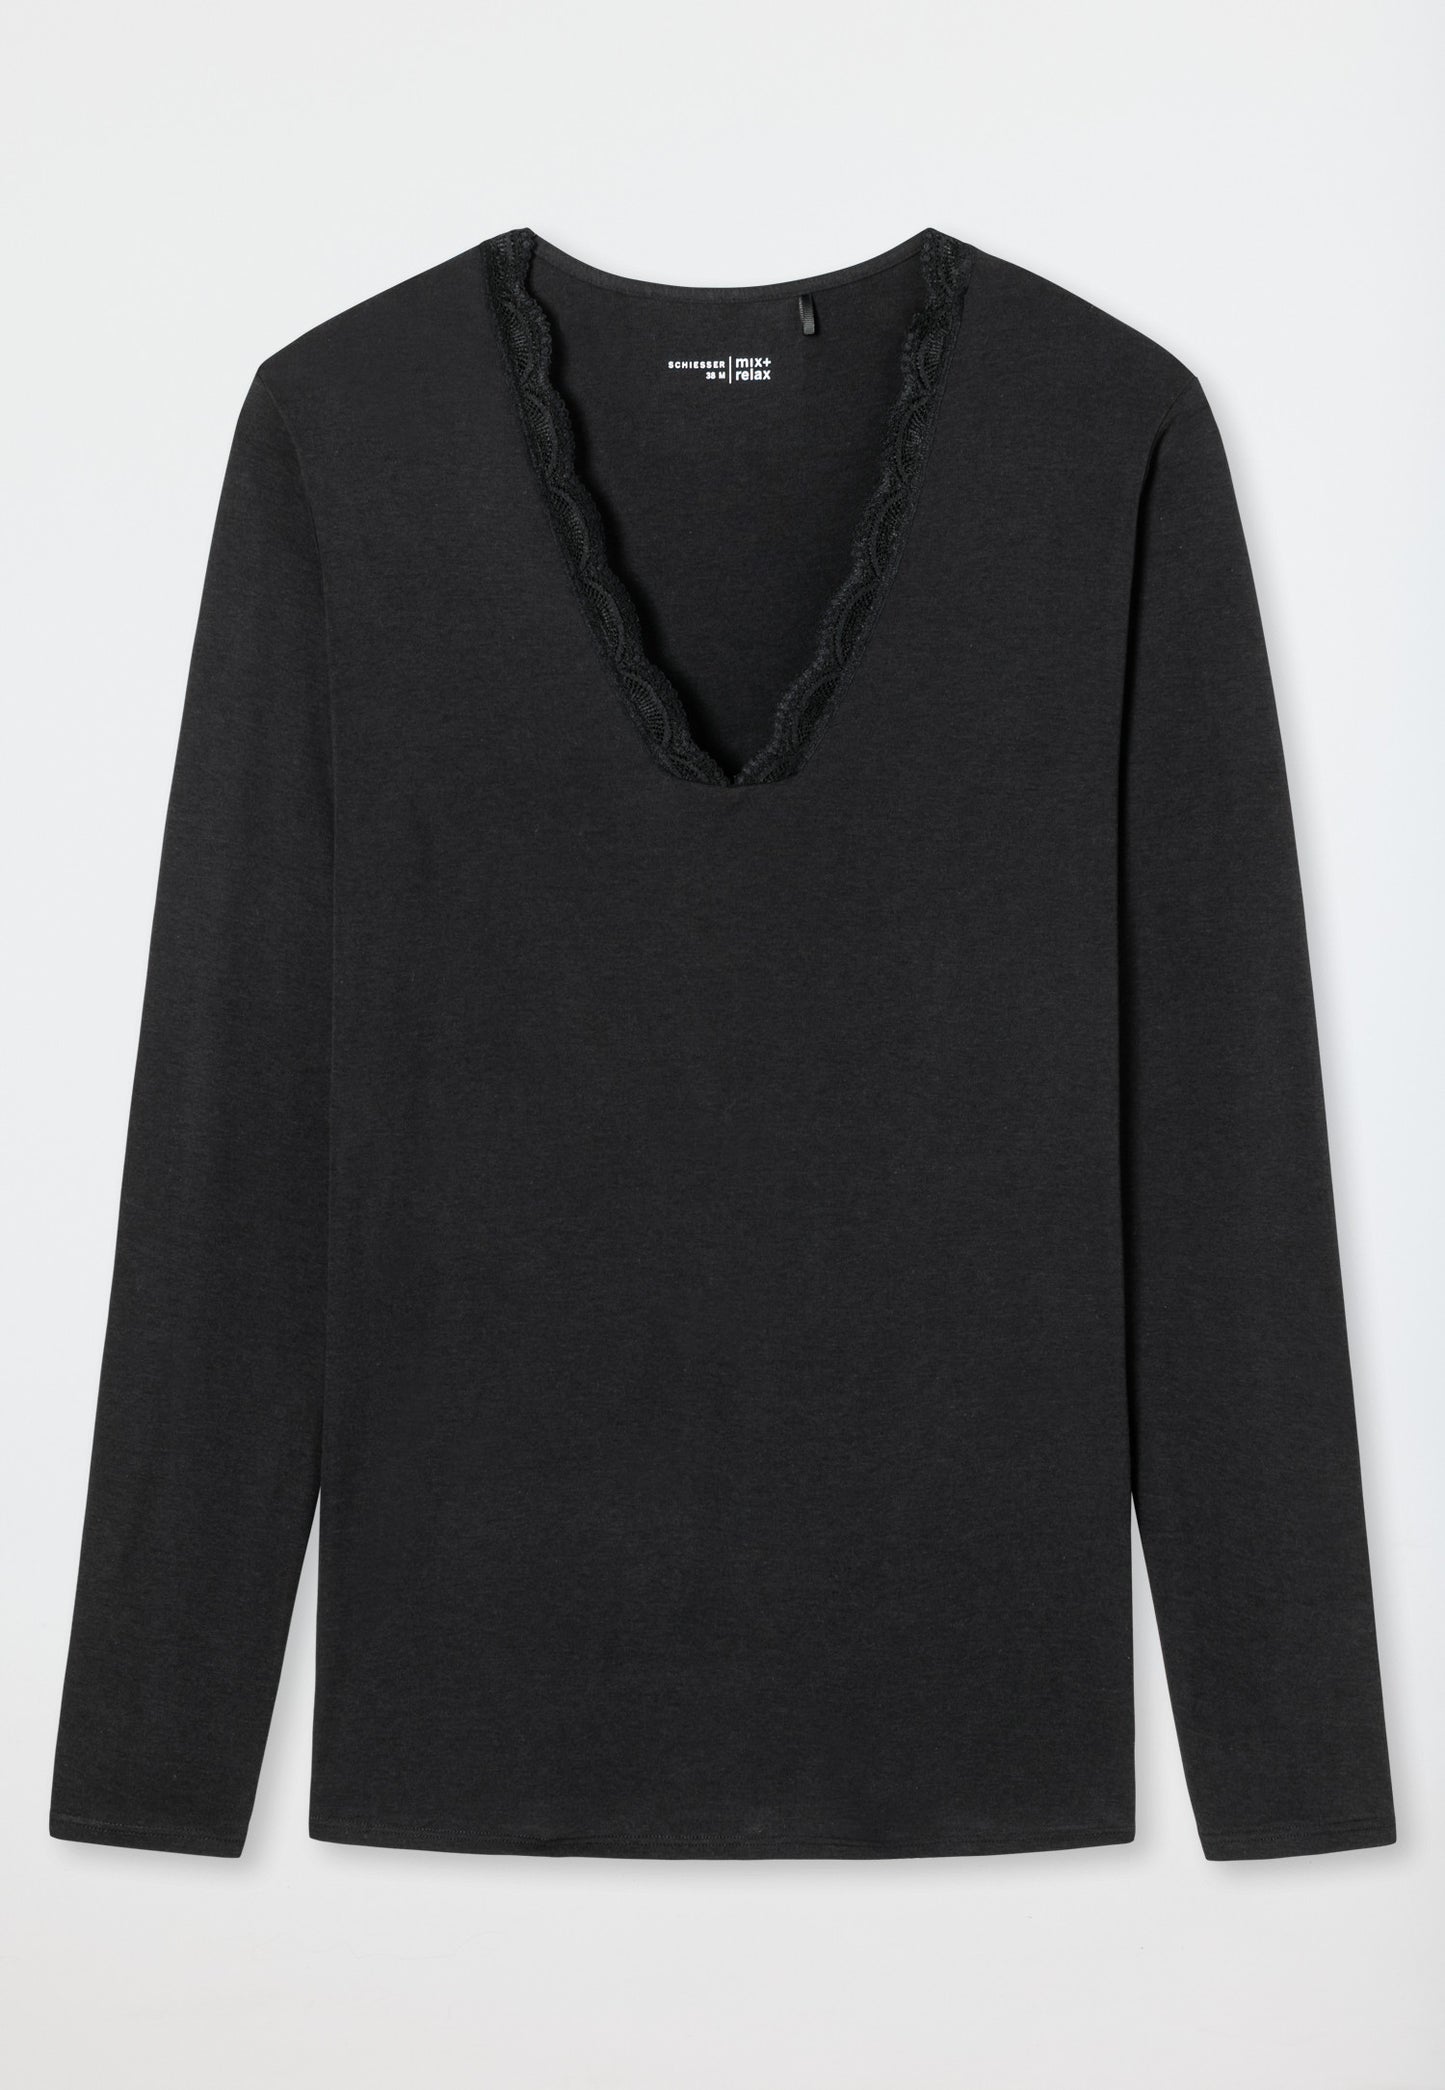 Shirt long-sleeved interlock V-neck lace black - Mix+Relax